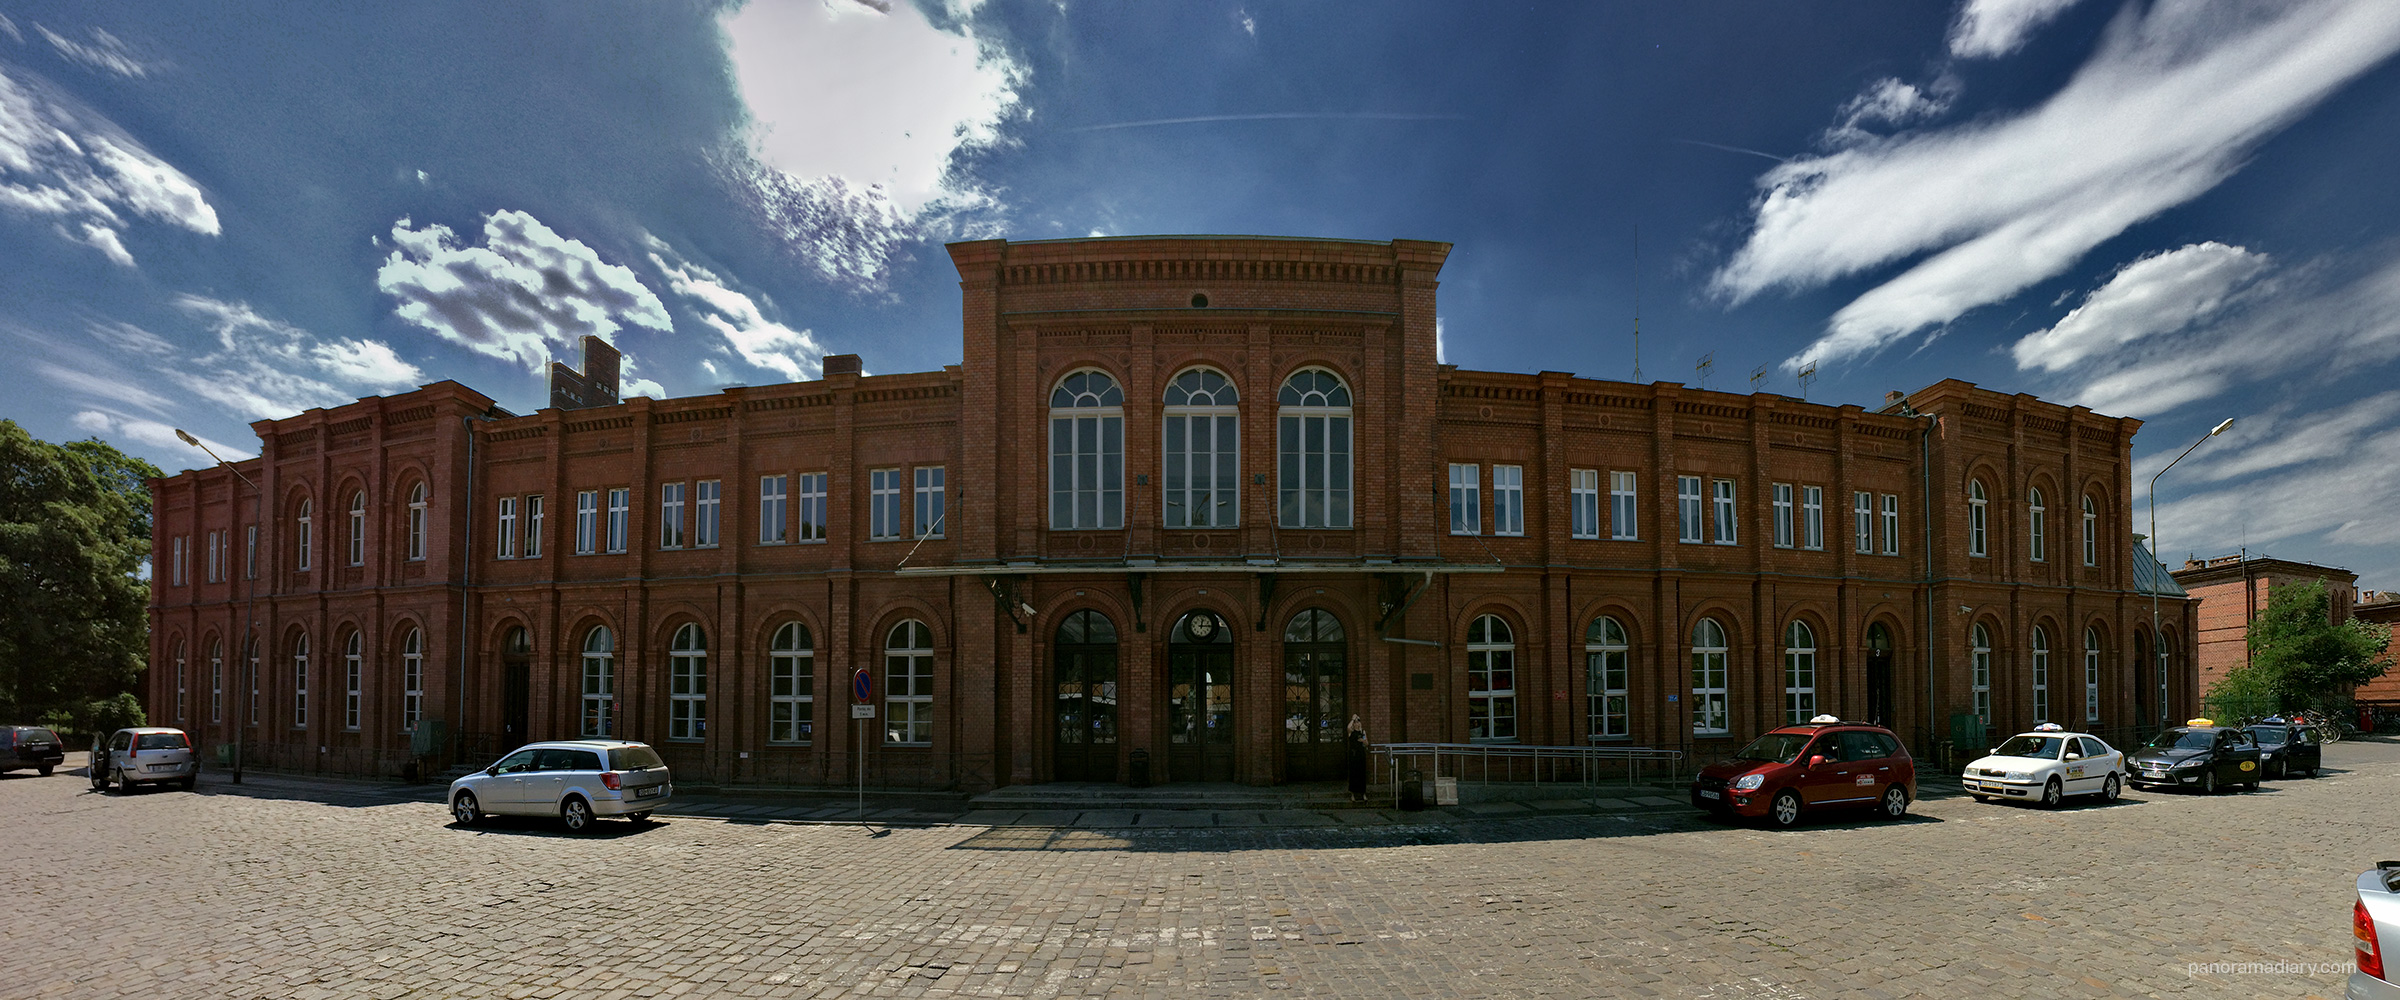 Brzeg train station building | PANORAMA DIARY